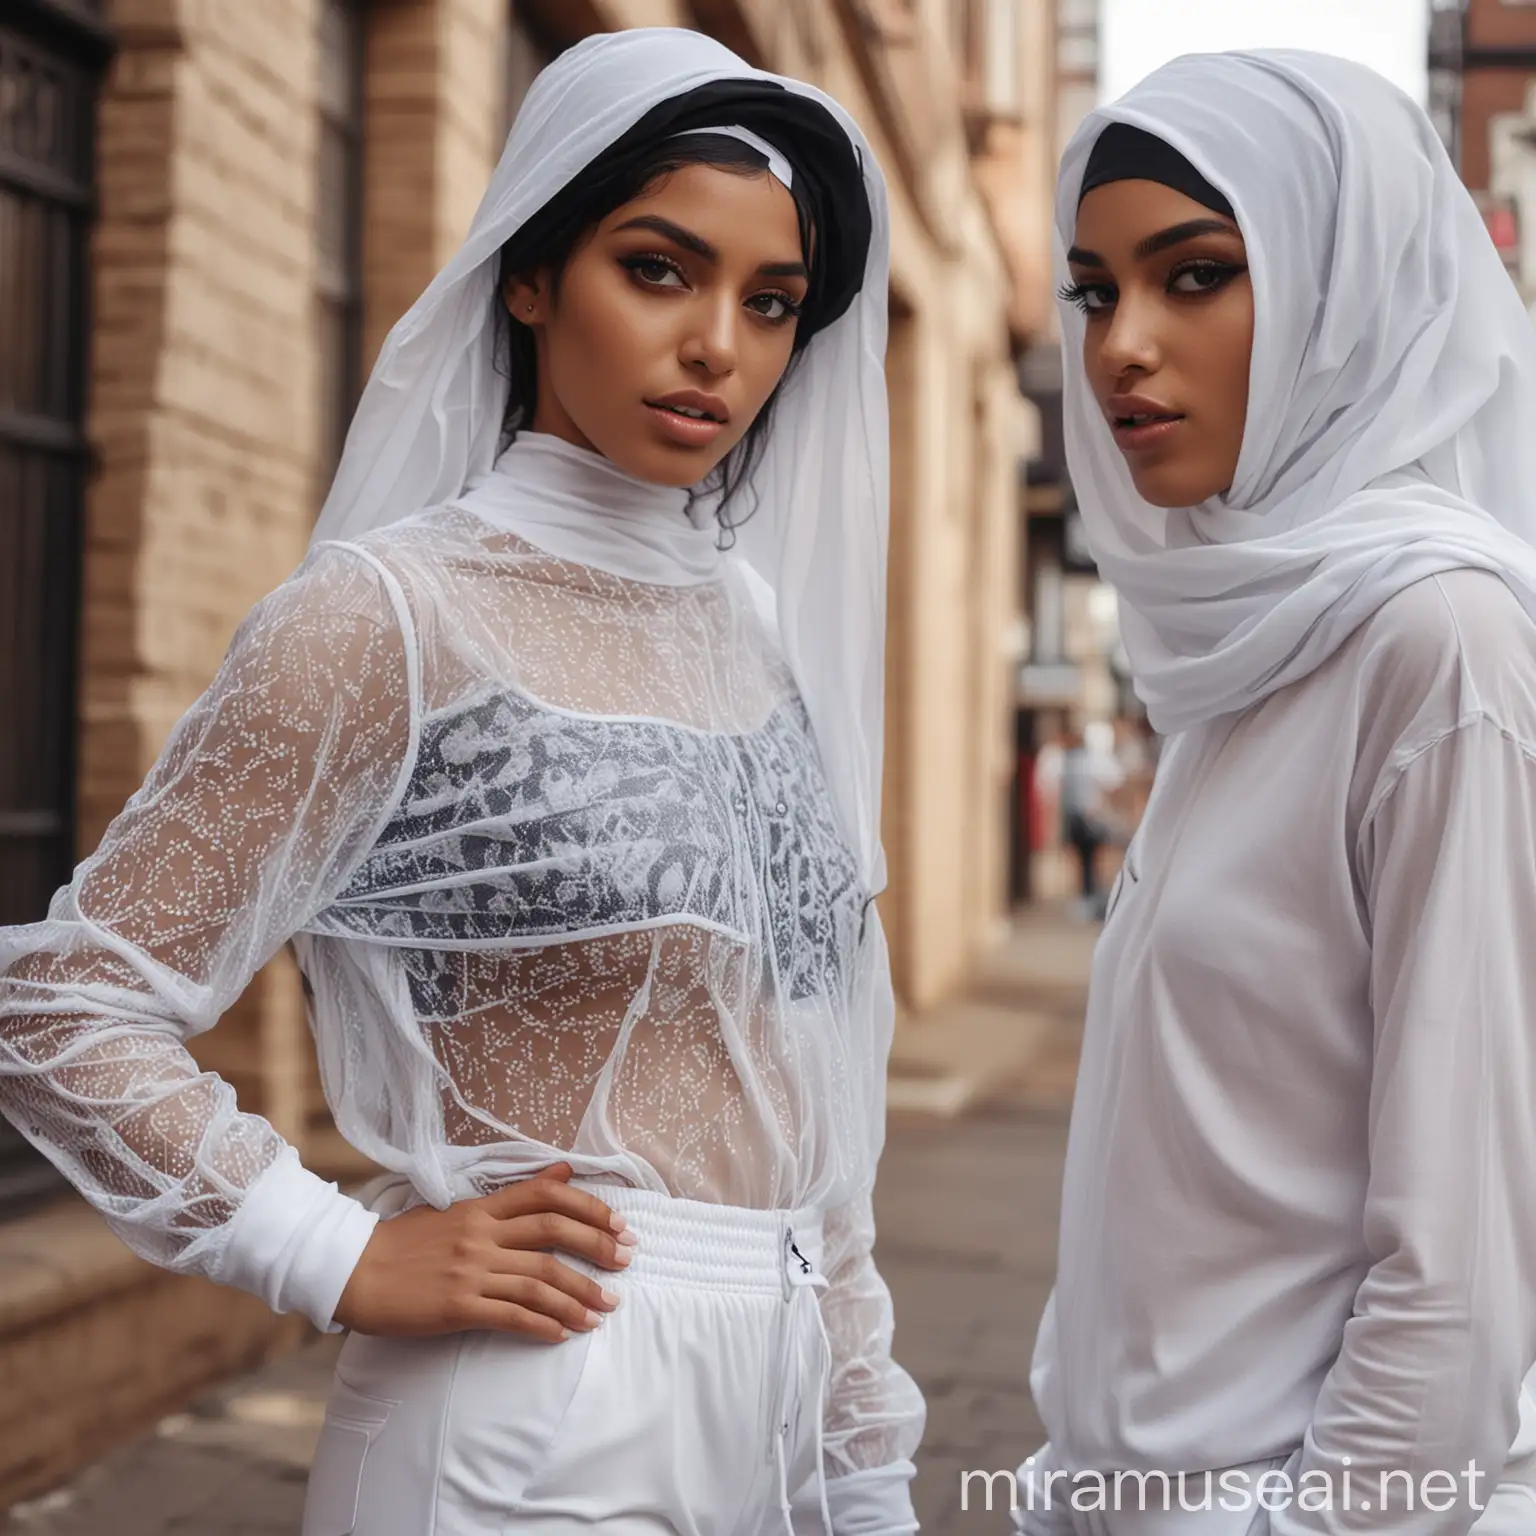 Tuareg Romance Memphis Streets Encounter with Ethnic Arab Fashionista